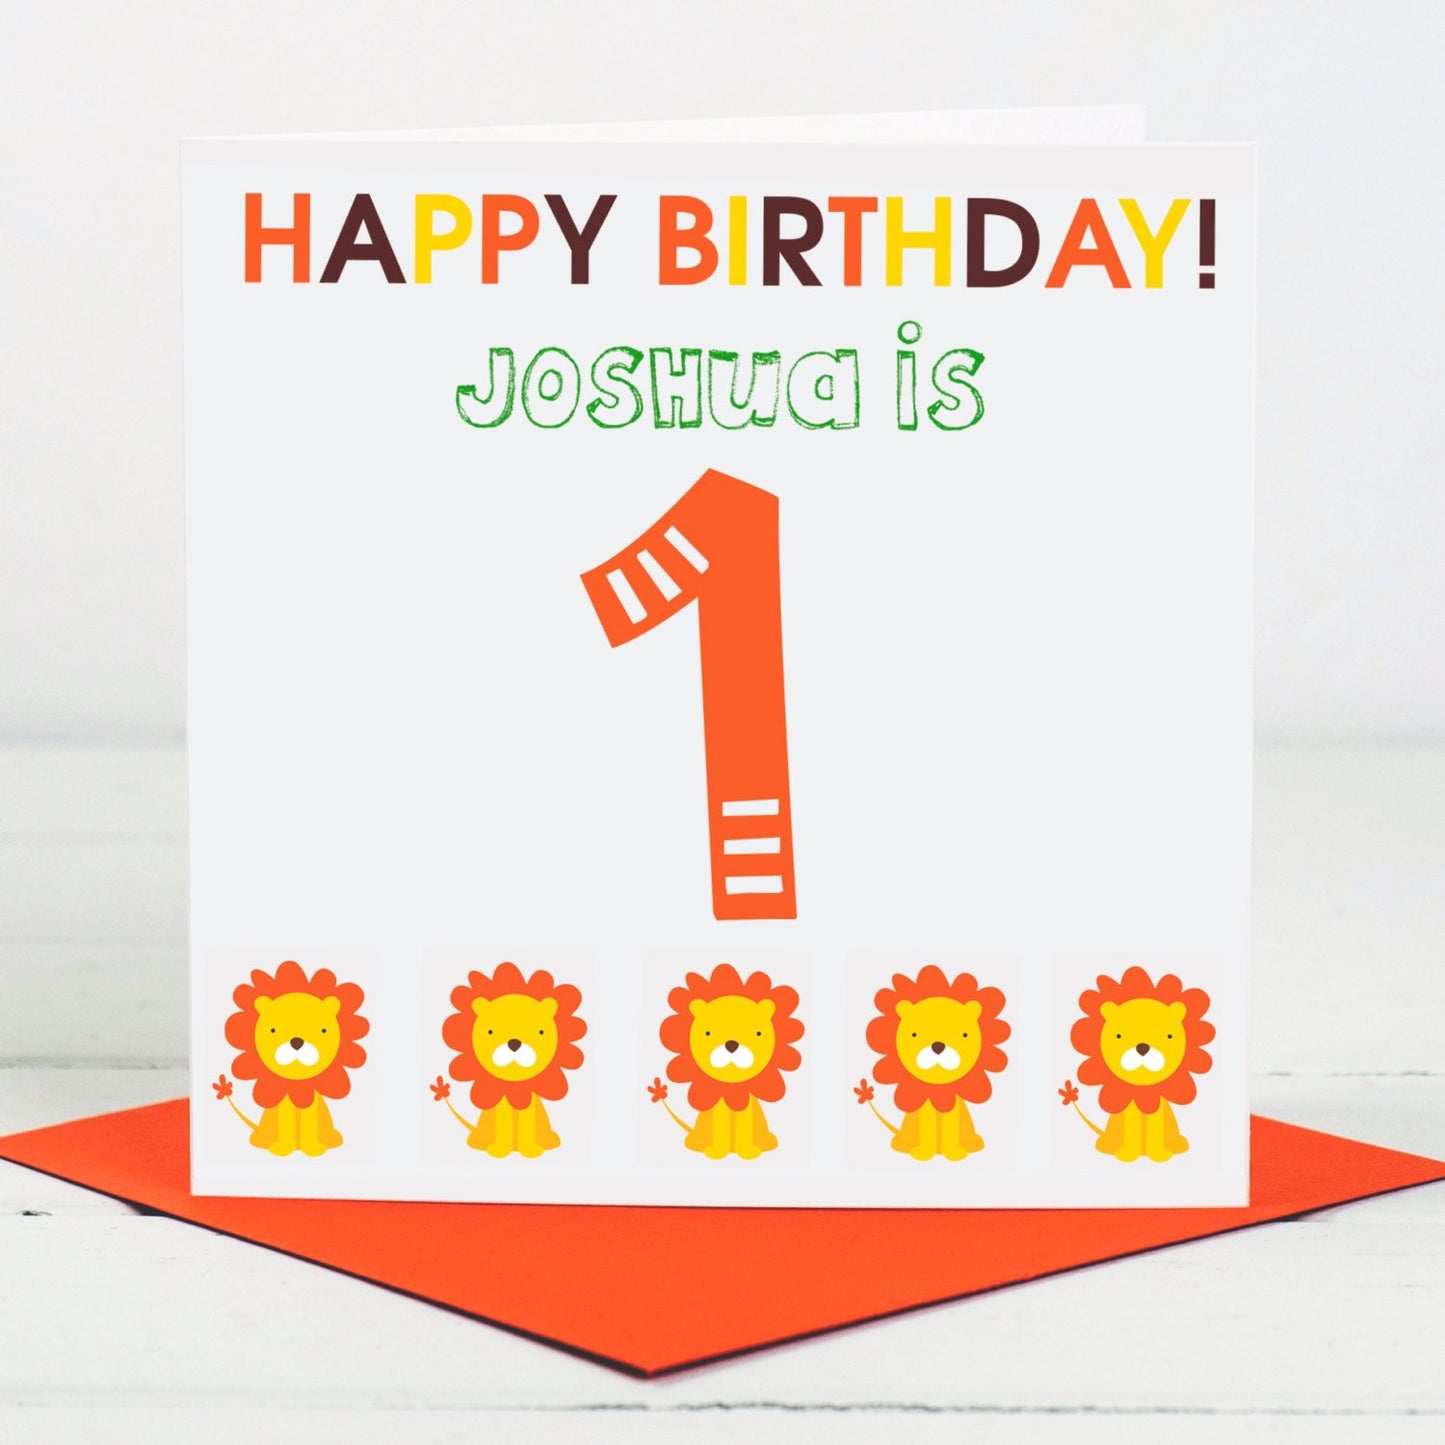 1st Birthday Card - Lion